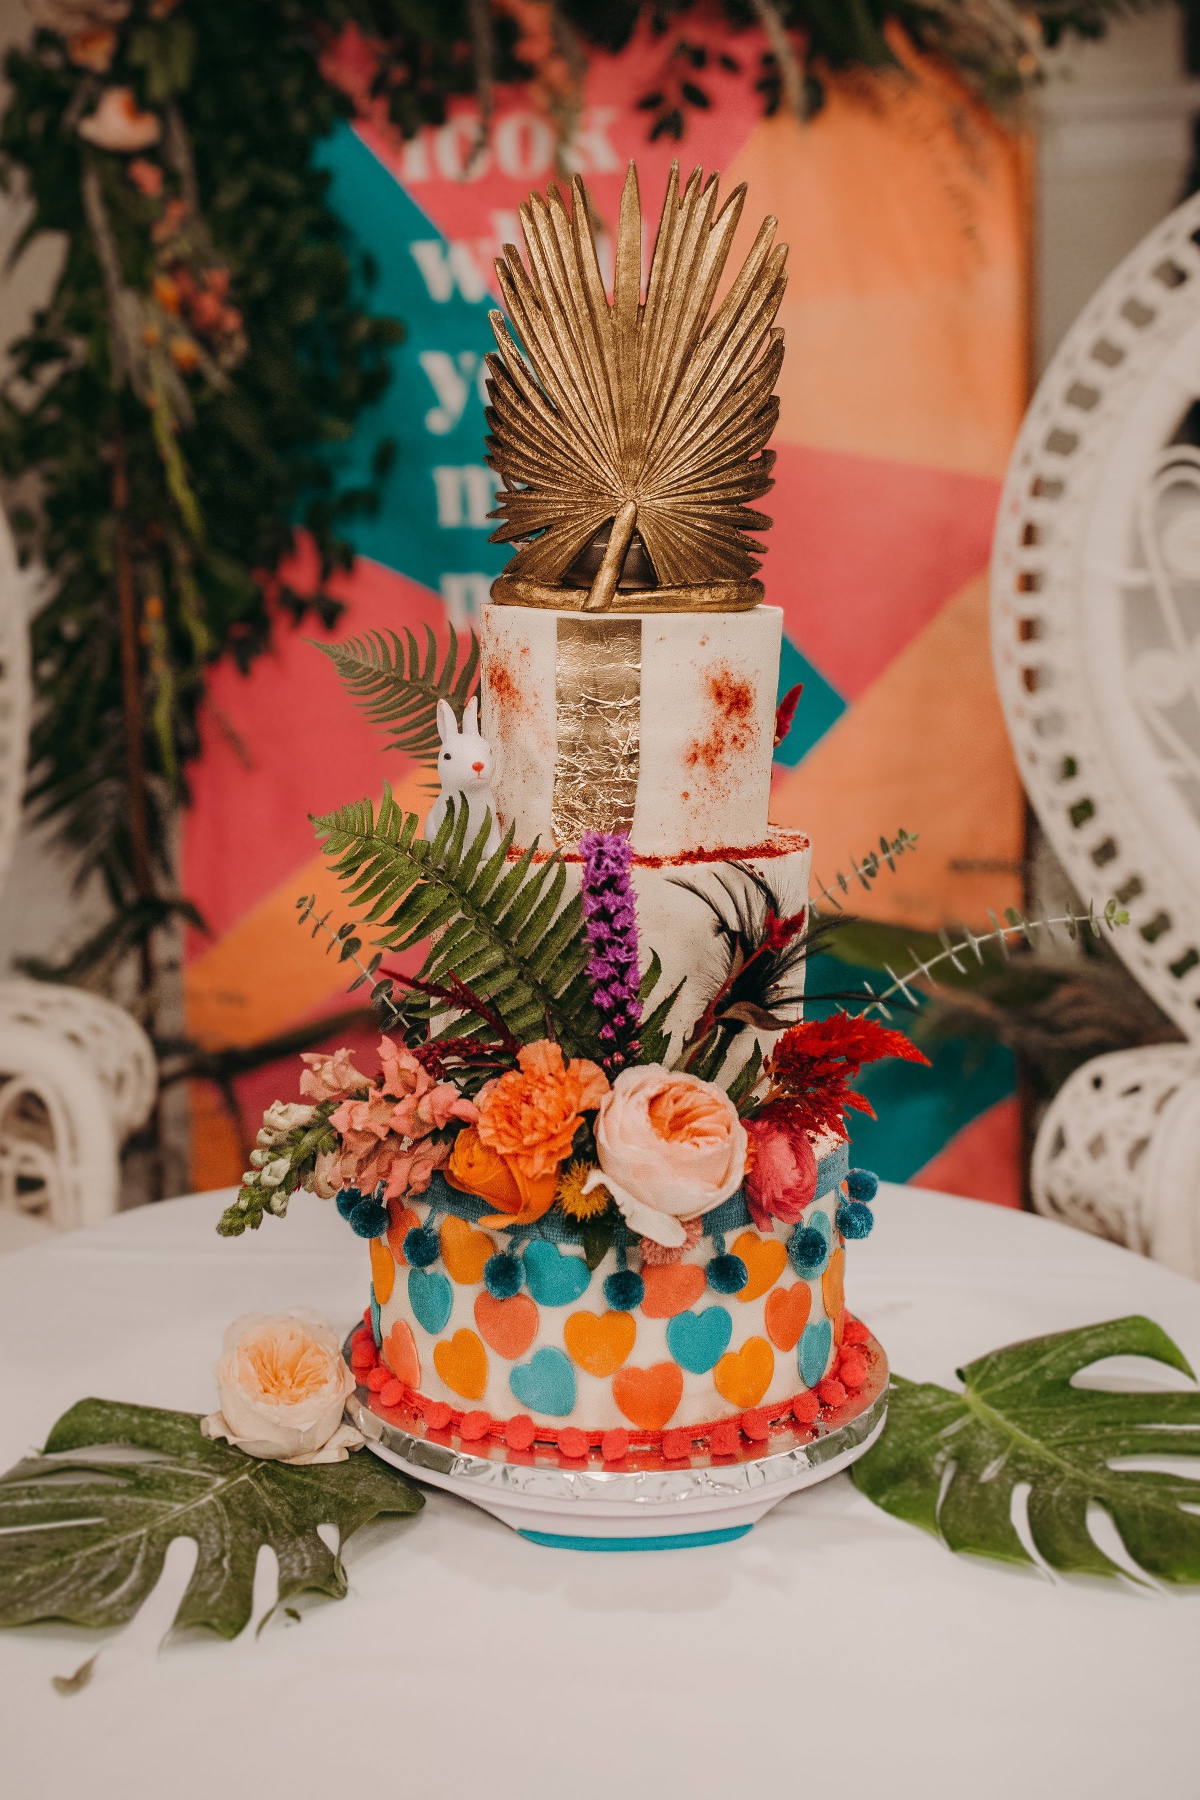 Eclectic Alice in Wonderland inspired wedding cake design